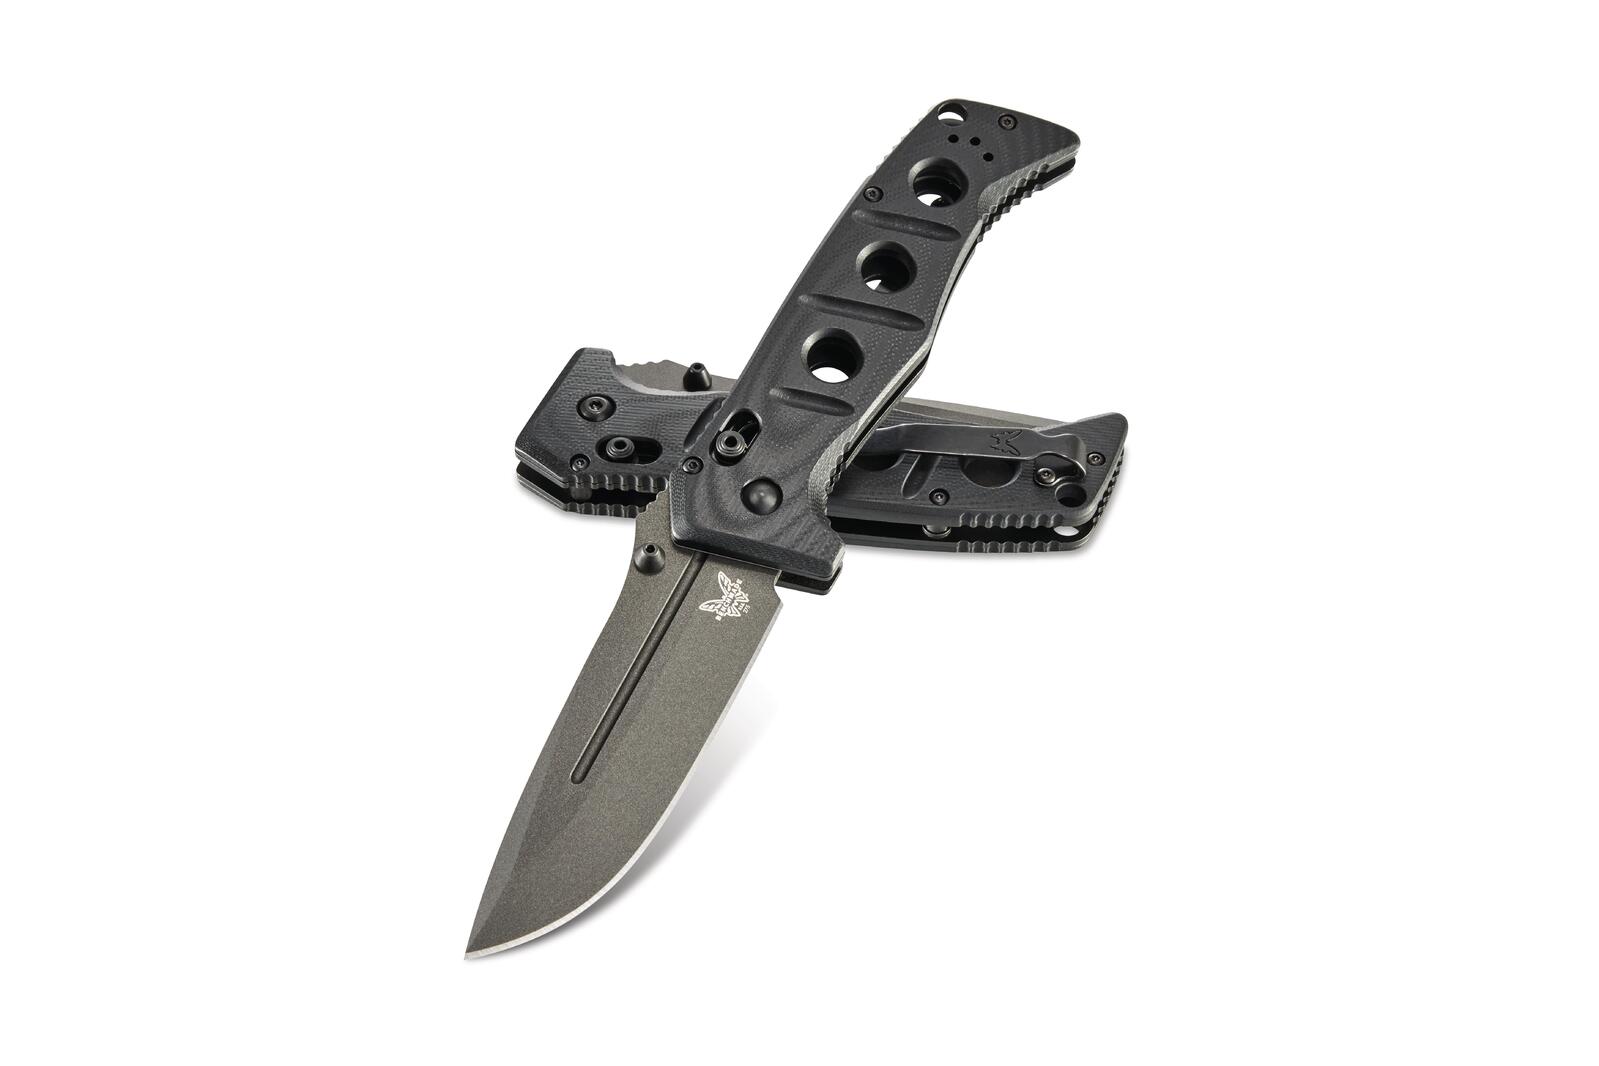 Benchmade 275GY-1 Adamas Axis Folding Knife - Black G10 Handle - Wander Outdoors